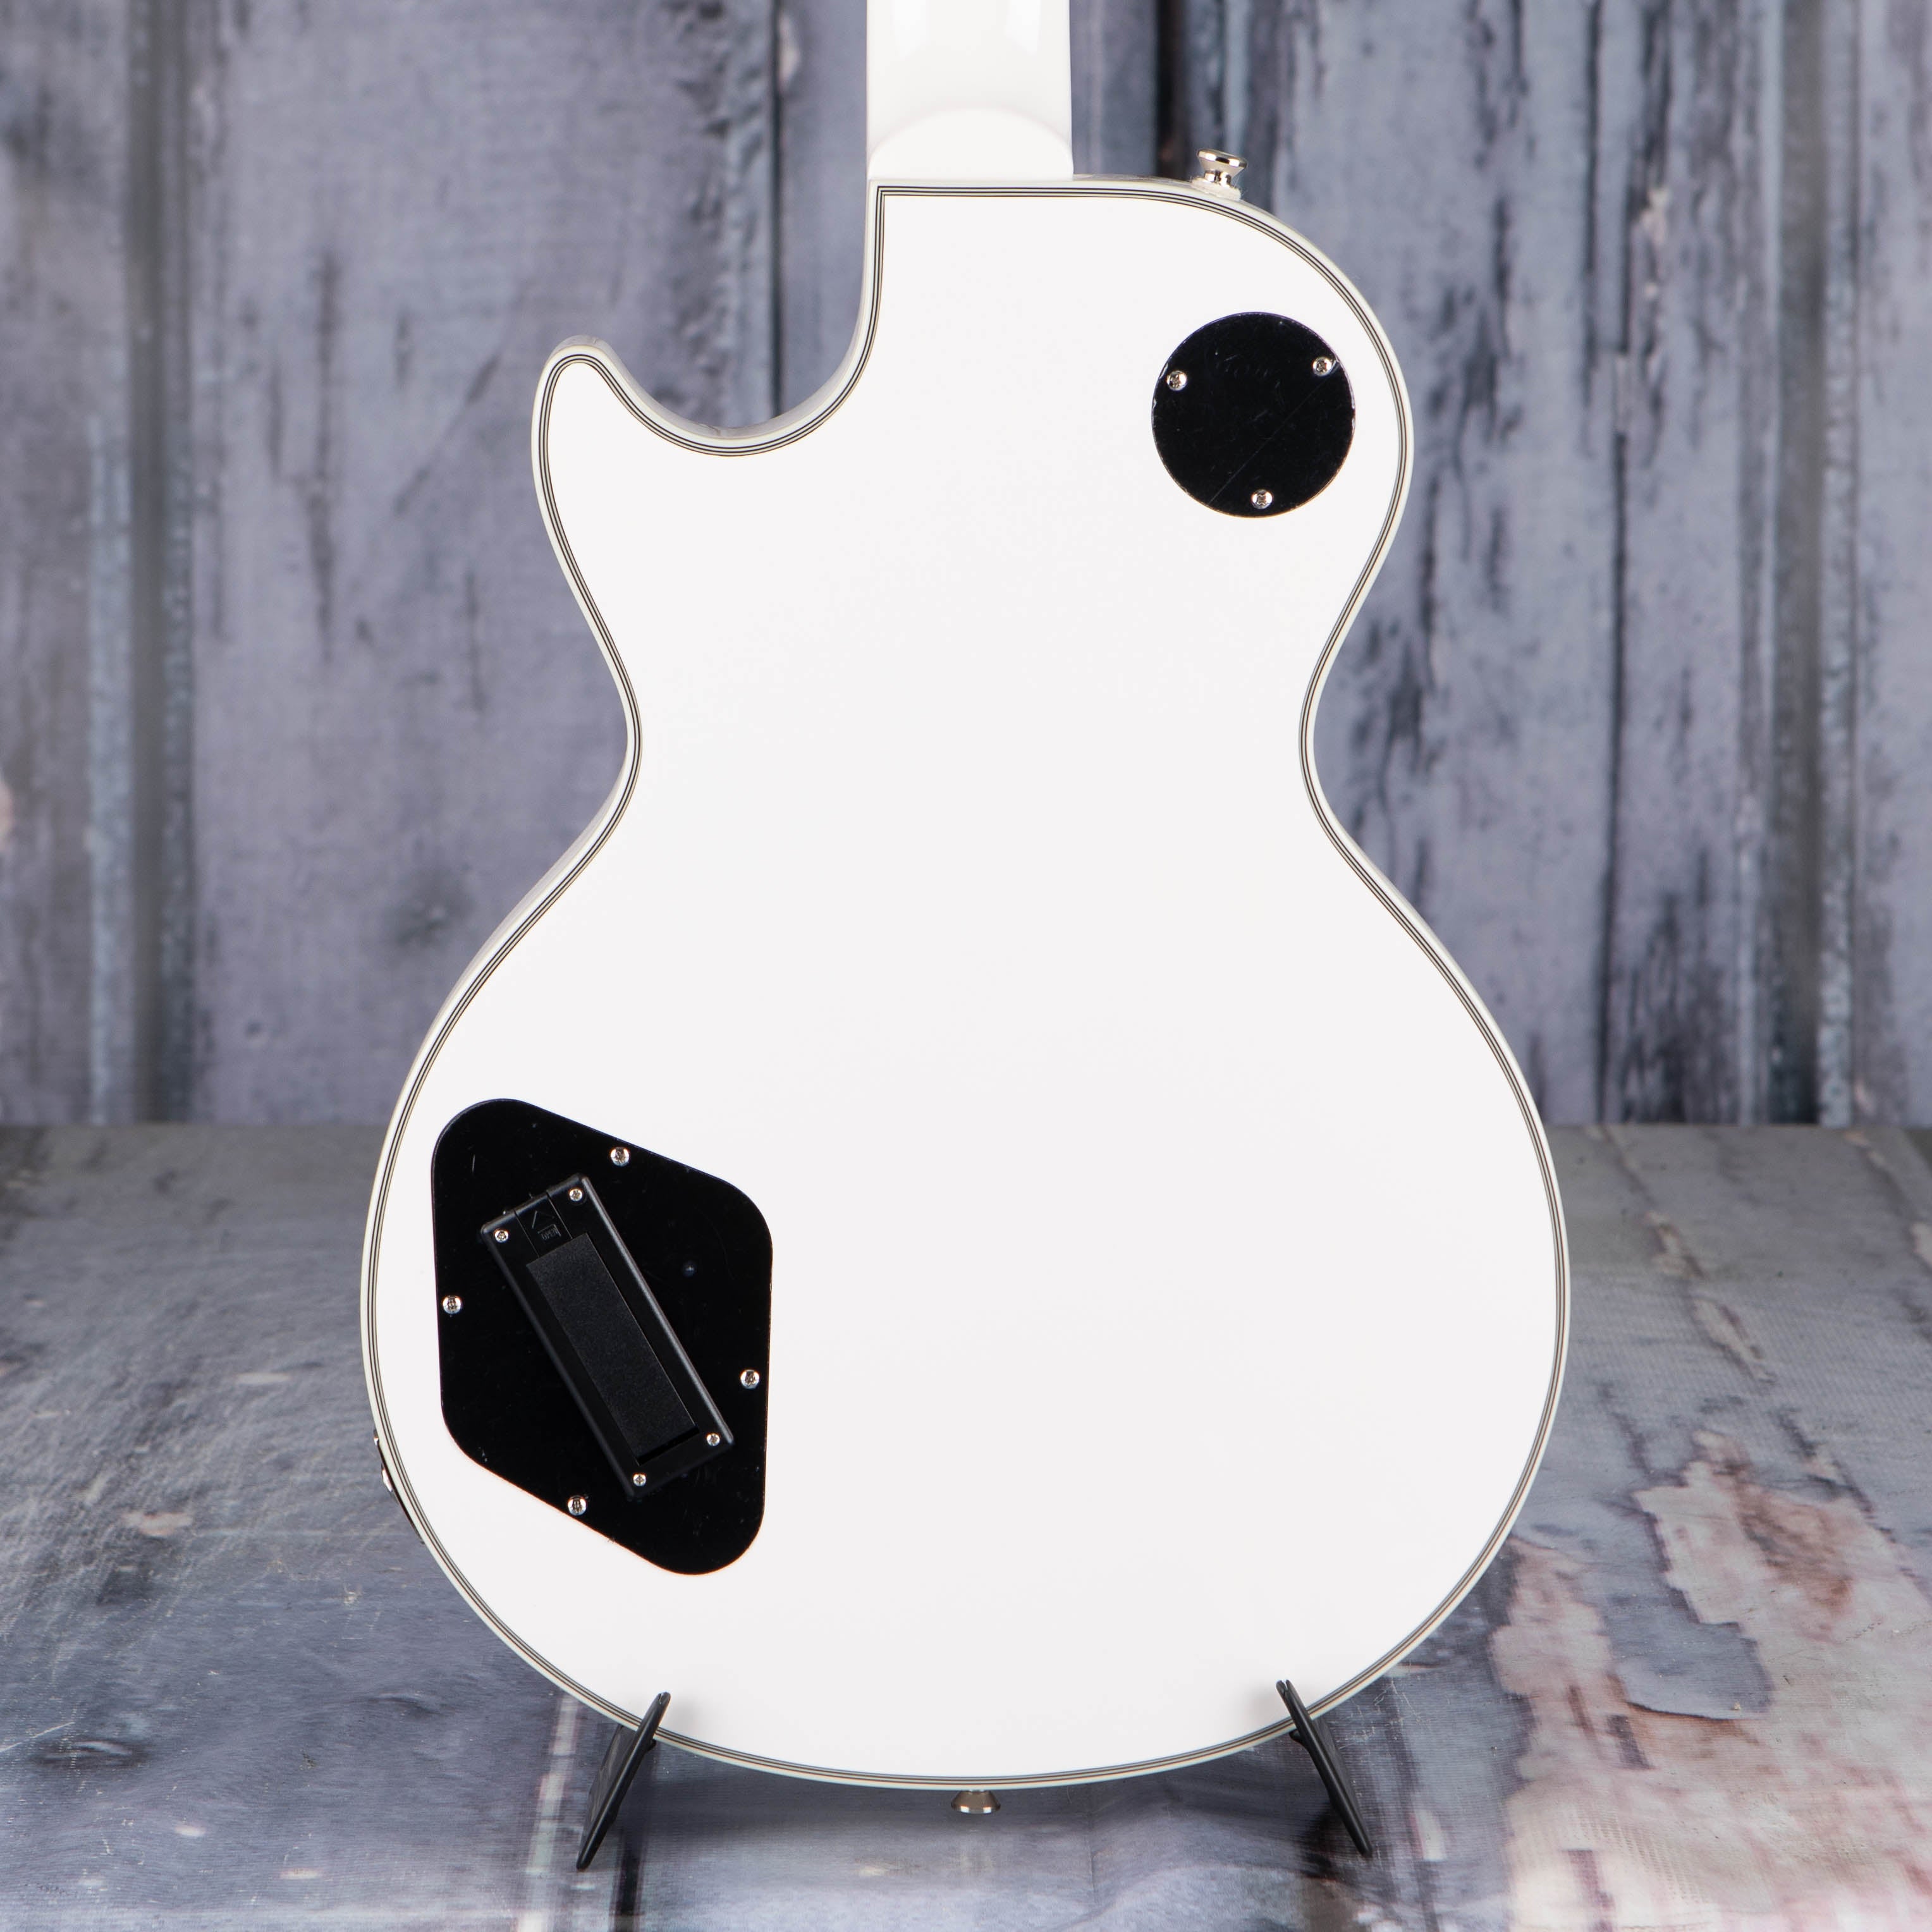 Epiphone Jerry Cantrell Prophecy Les Paul Custom Electric Guitar, Bone White, back closeup